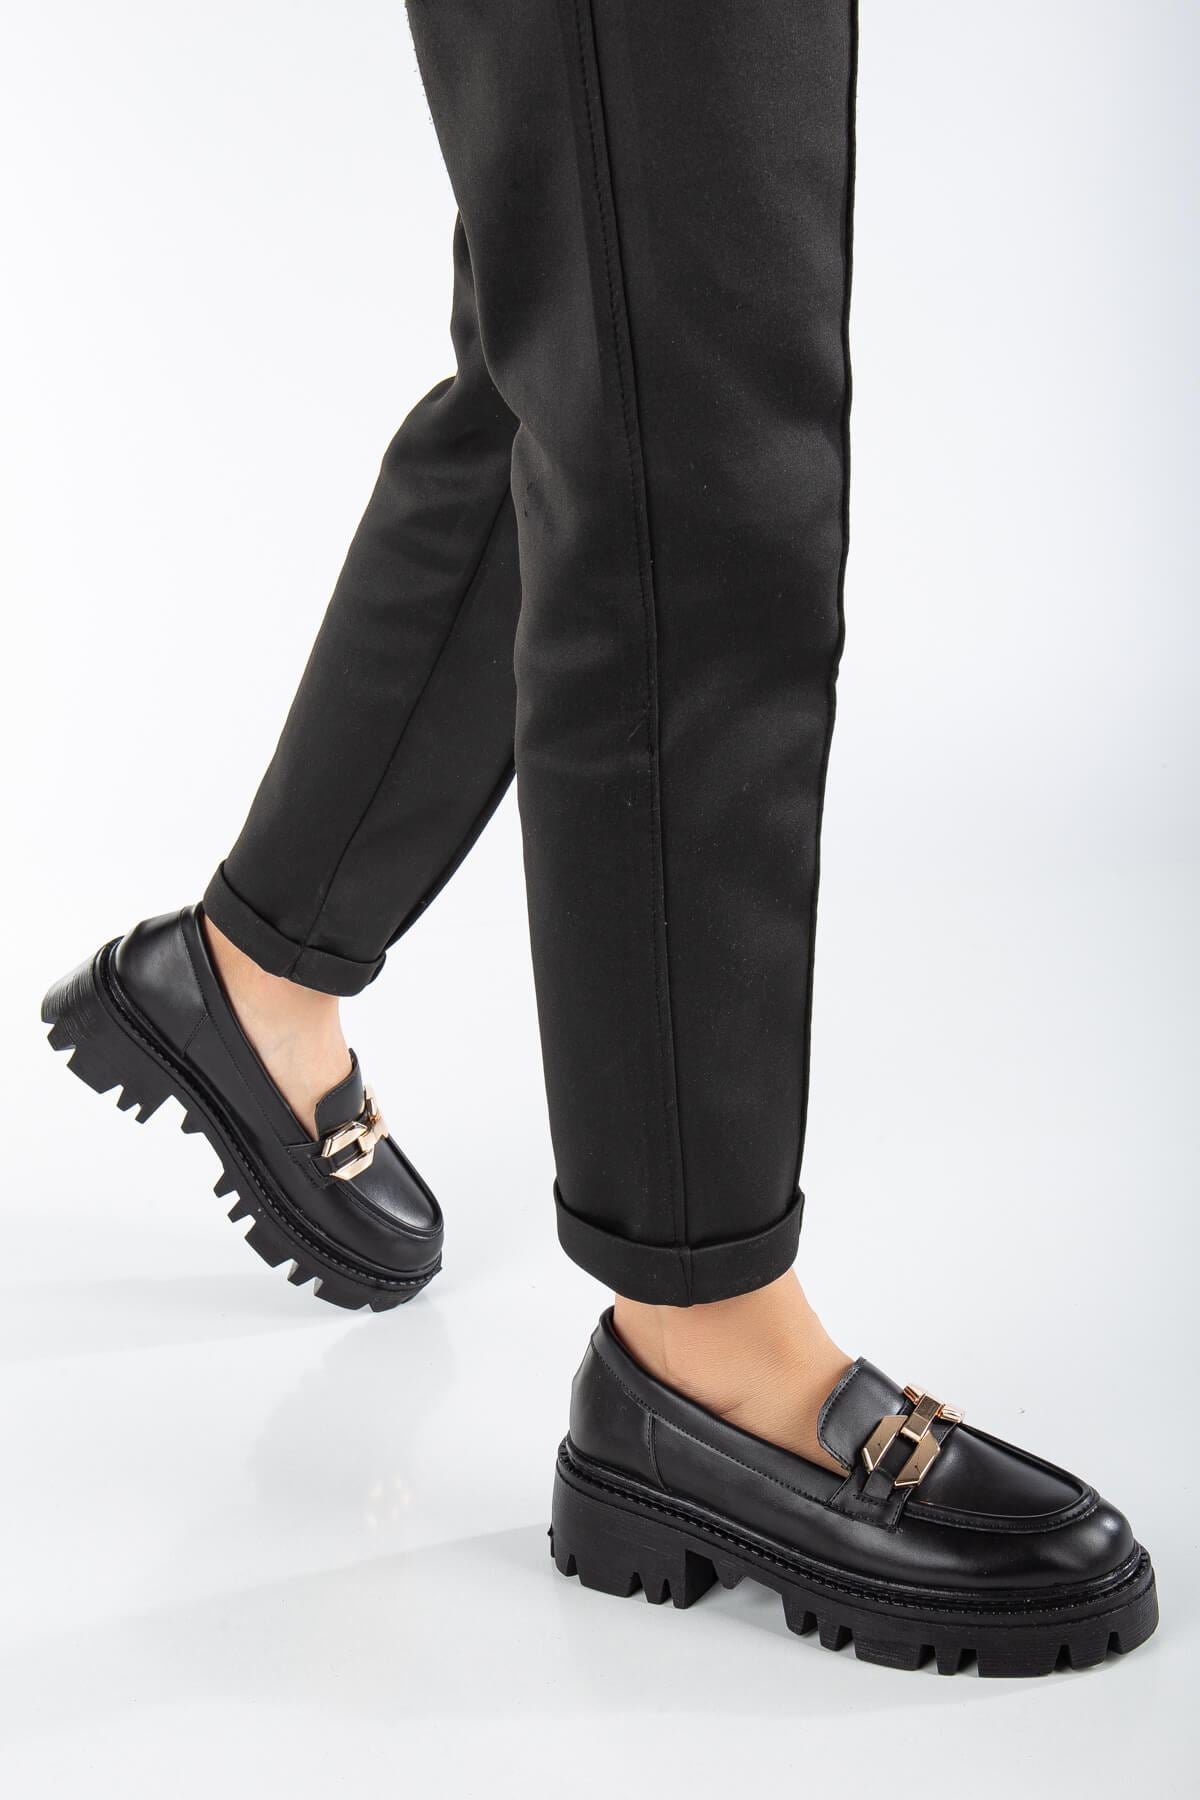 SONO Black Skin Oxford Women's Shoes - STREETMODE ™